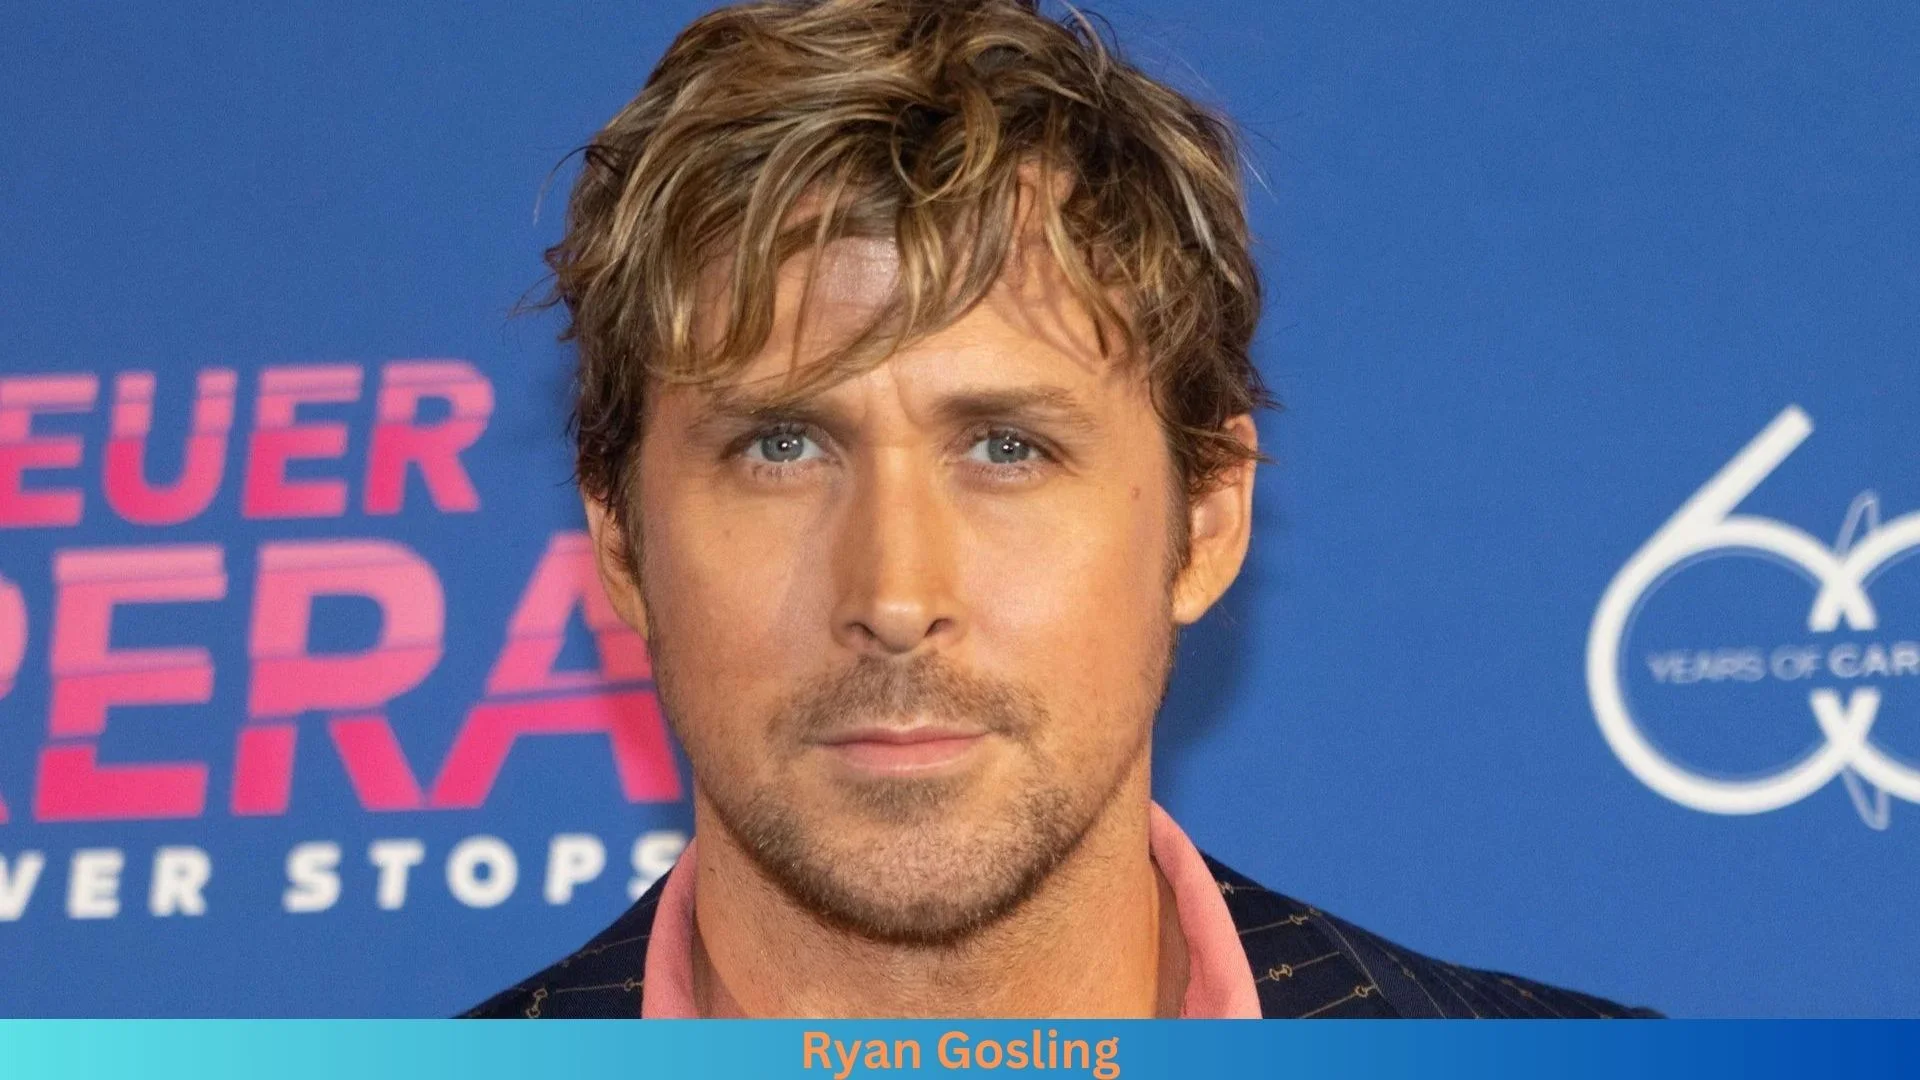 Net Worth of Ryan Gosling